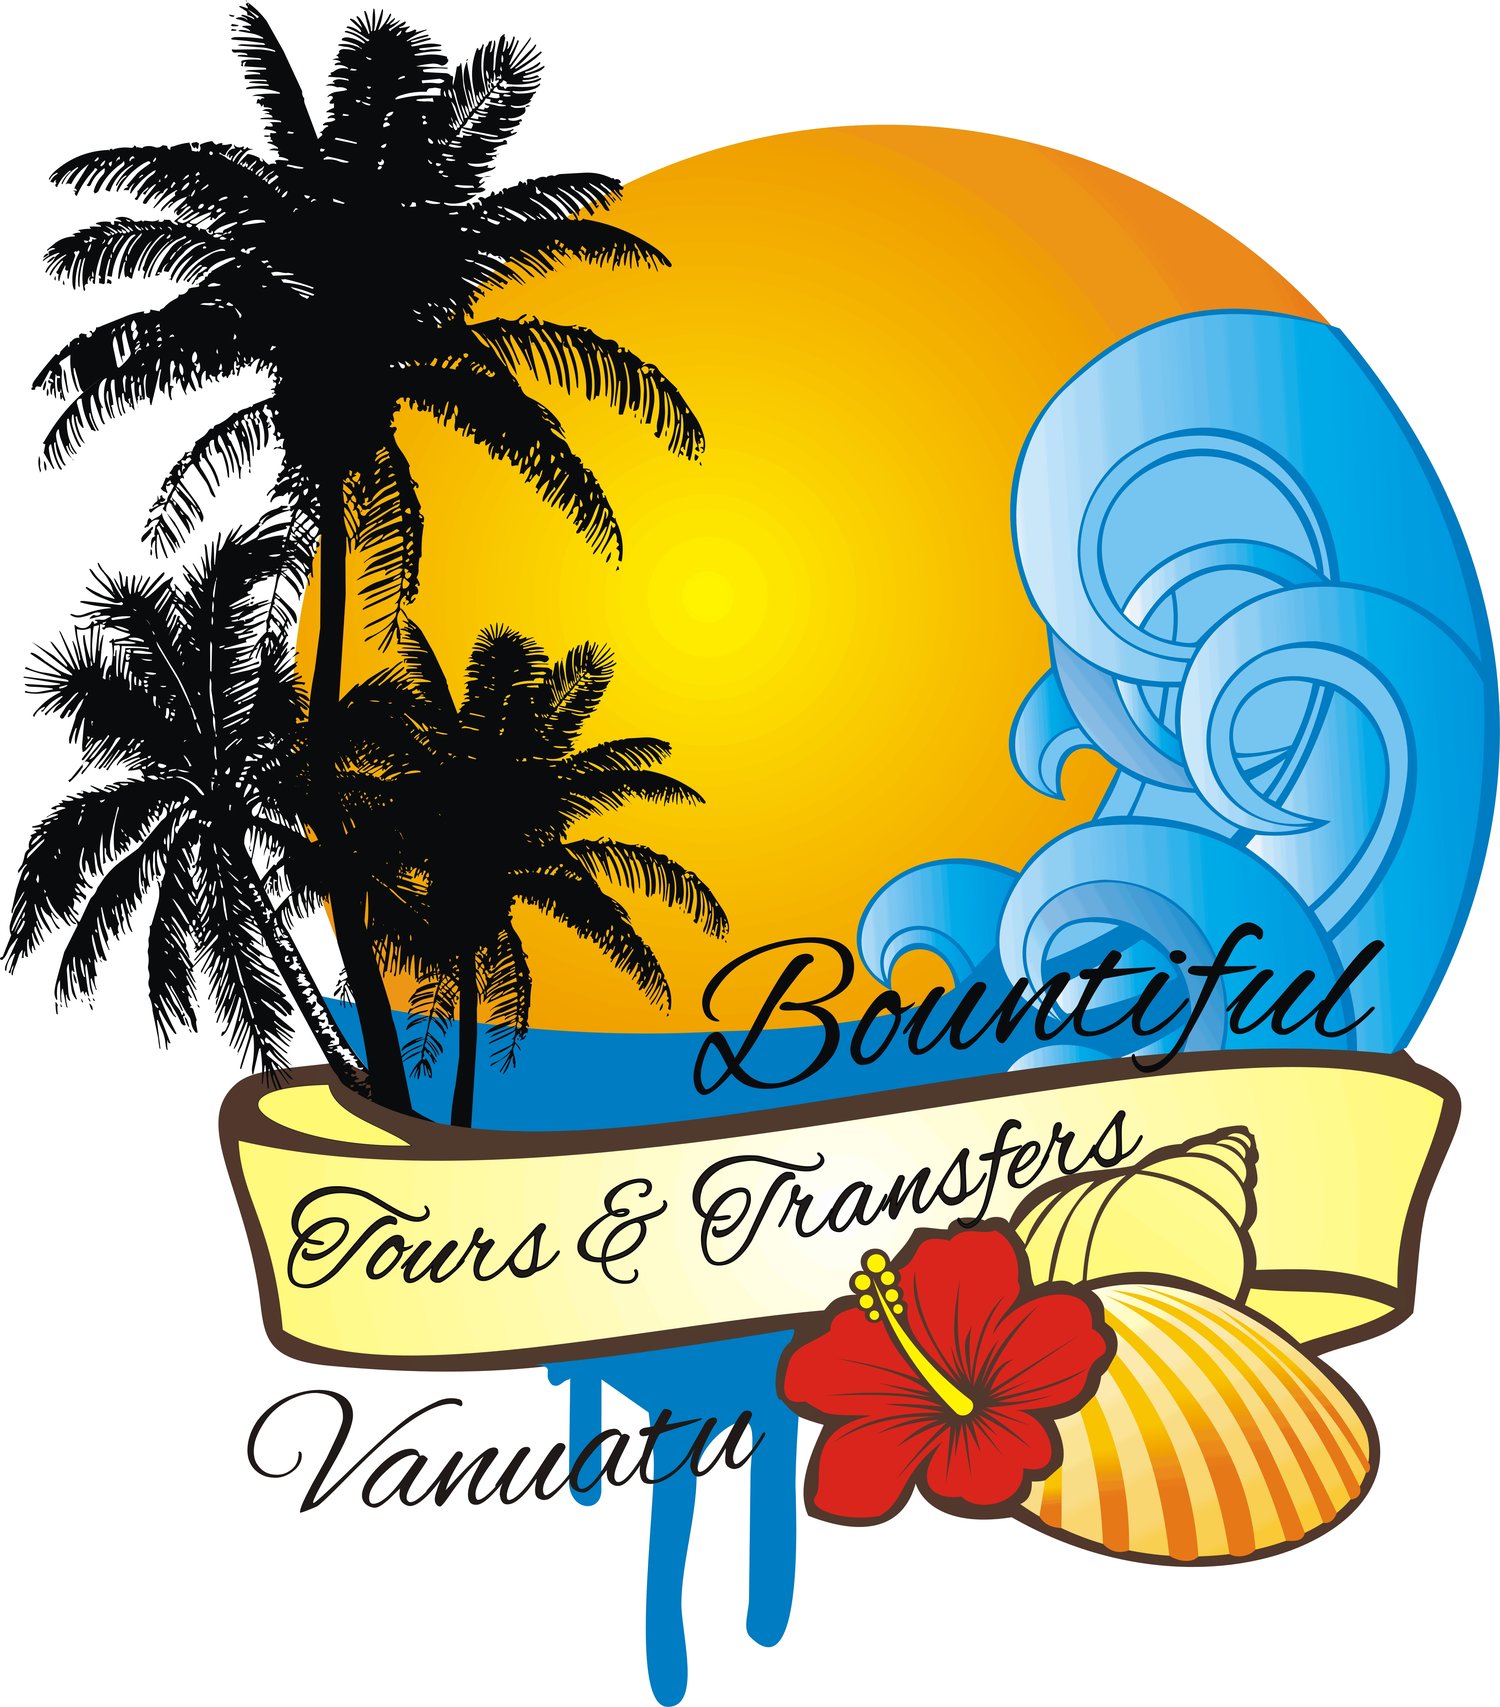 Bountiful Tours and Transfers Vanuatu